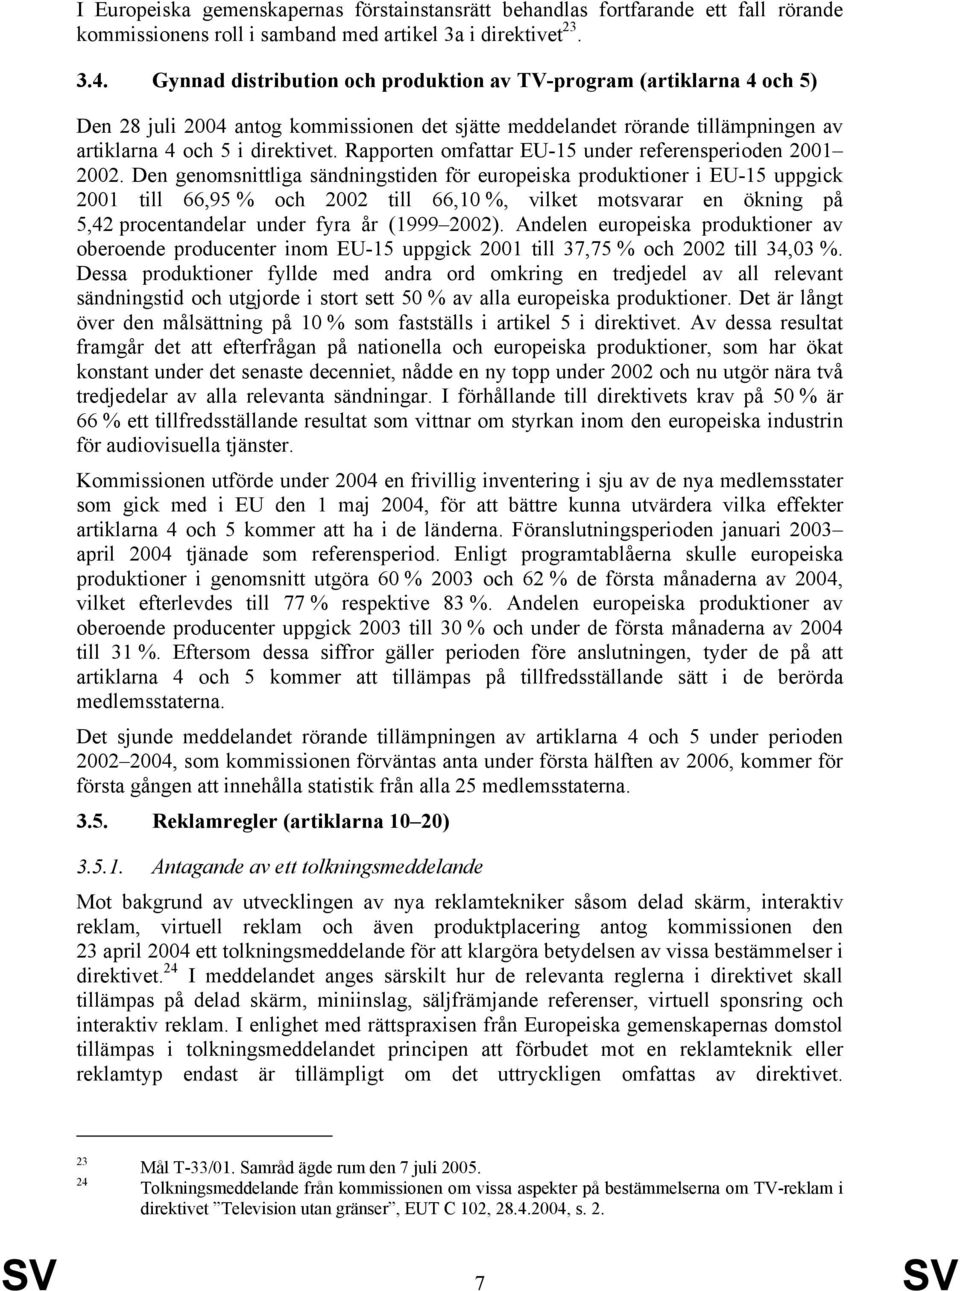 Rapporten omfattar EU-15 under referensperioden 2001 2002.